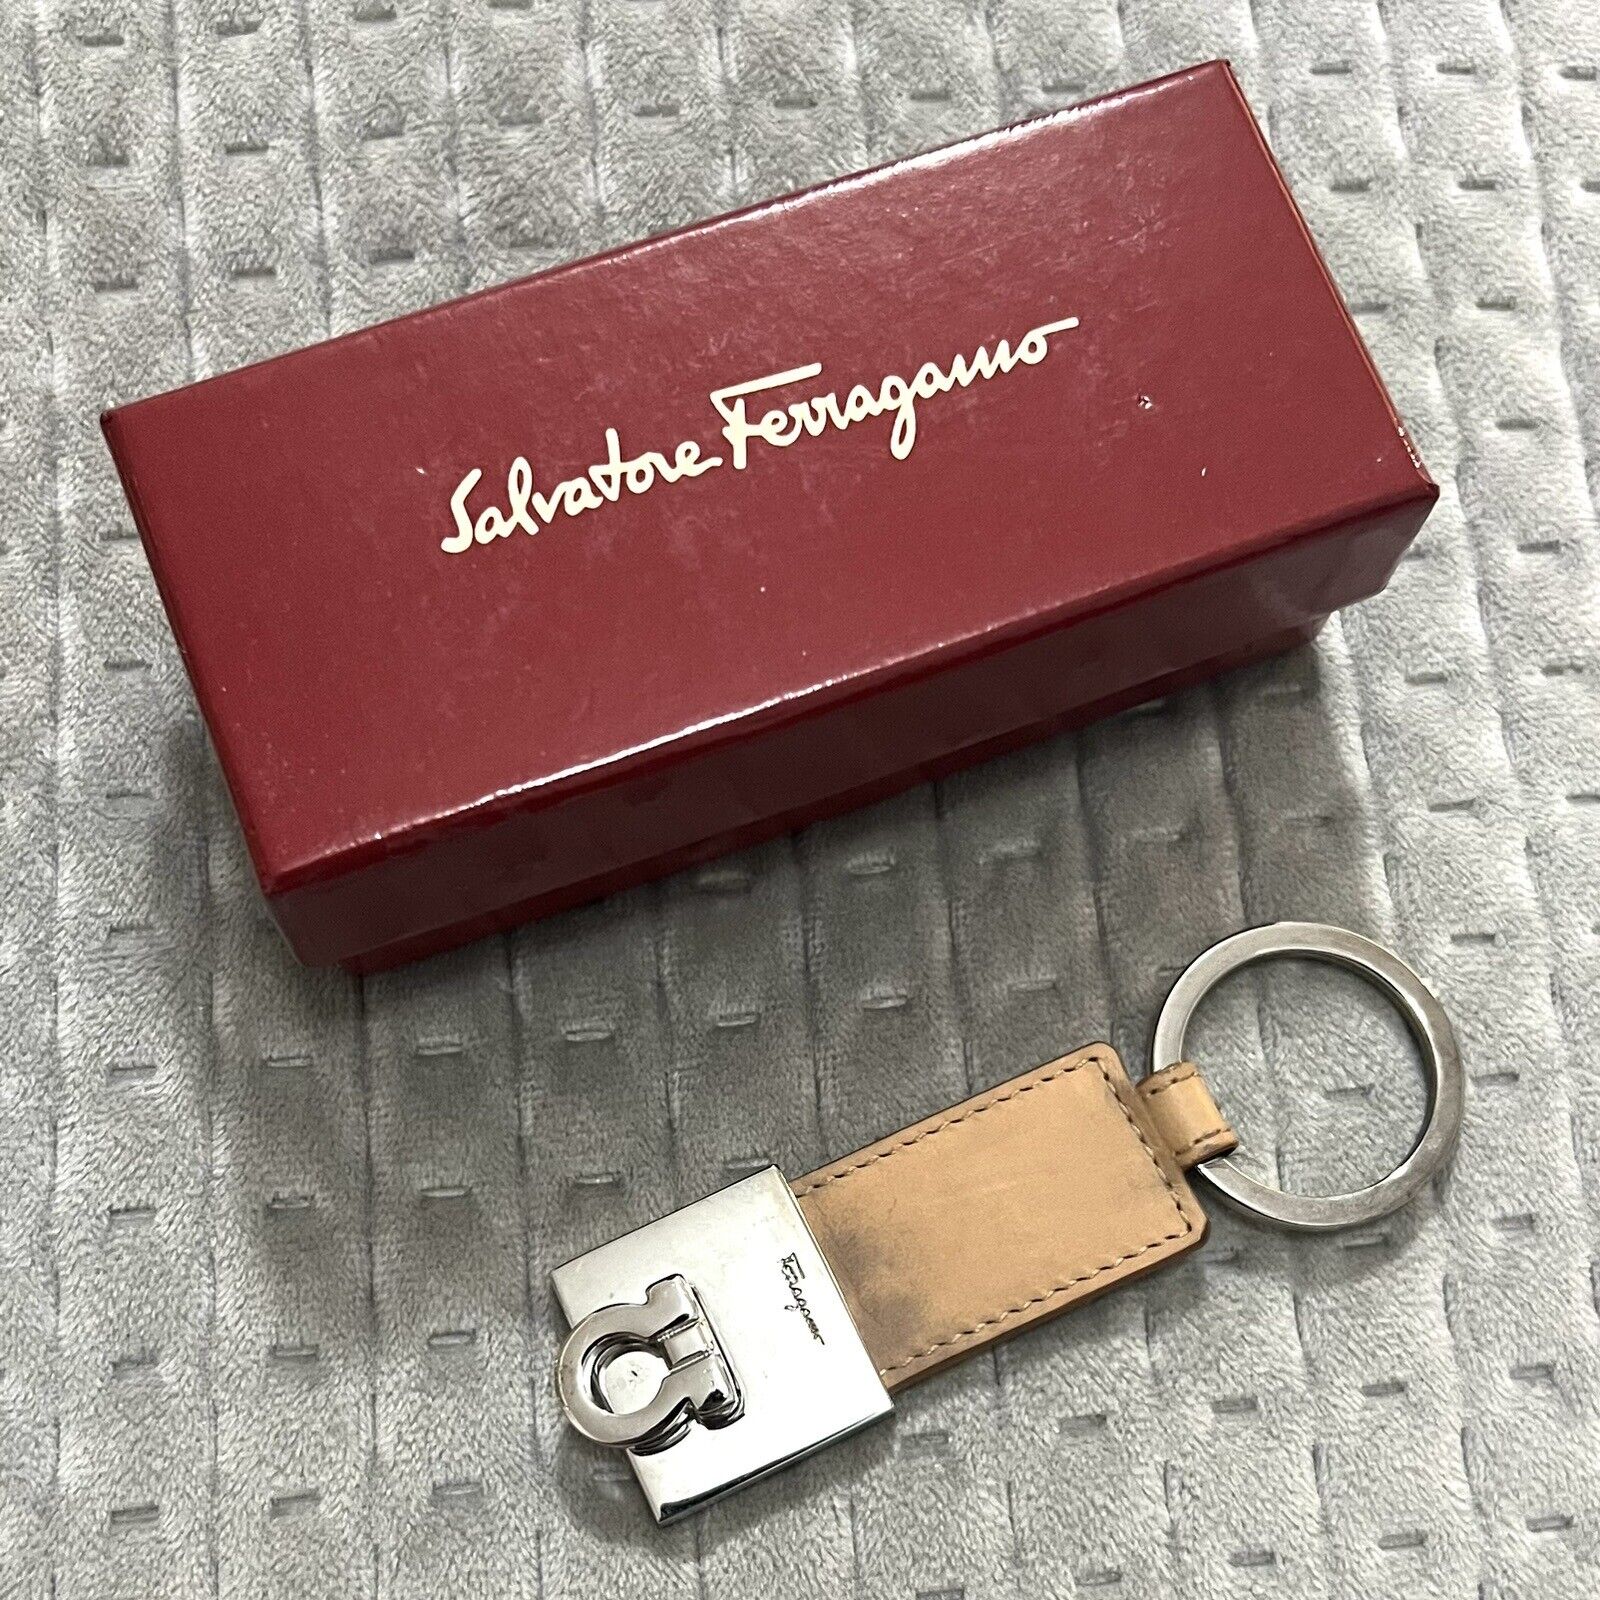 Salvatore Ferragamo Gancini Brown Leather Keychain Authentic With Original Box